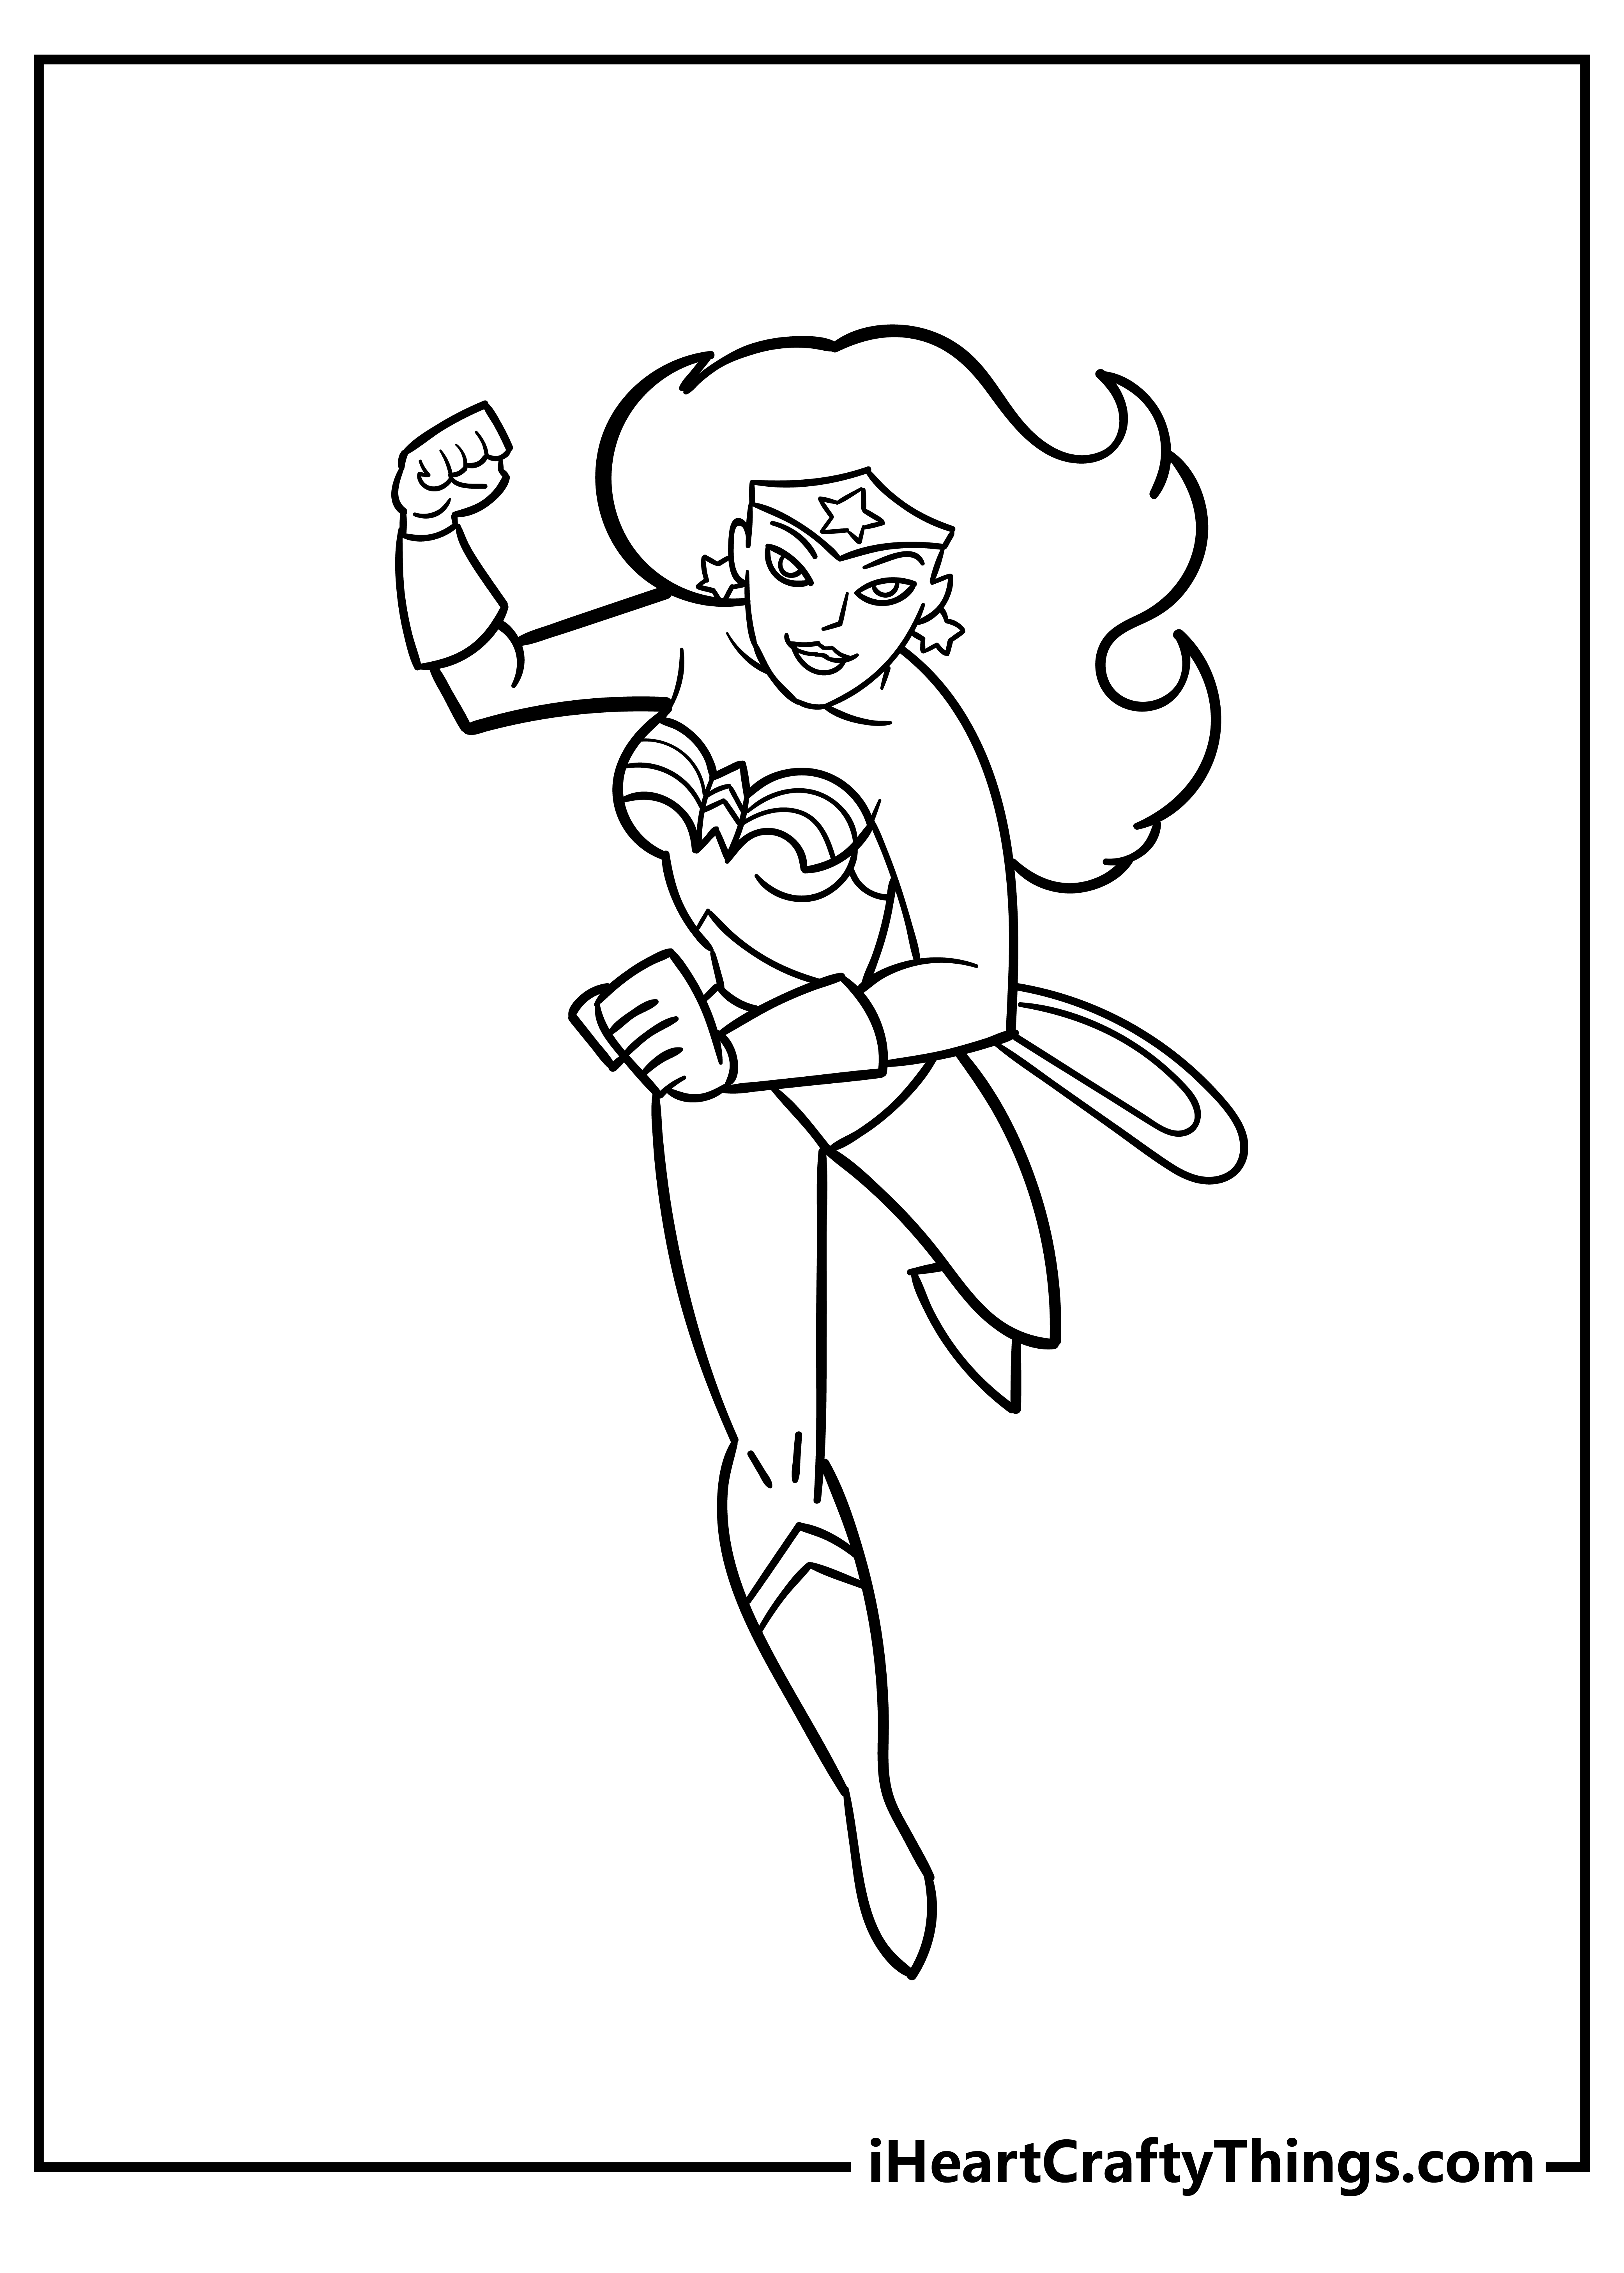 Wonder Woman Coloring Sheet for children free download